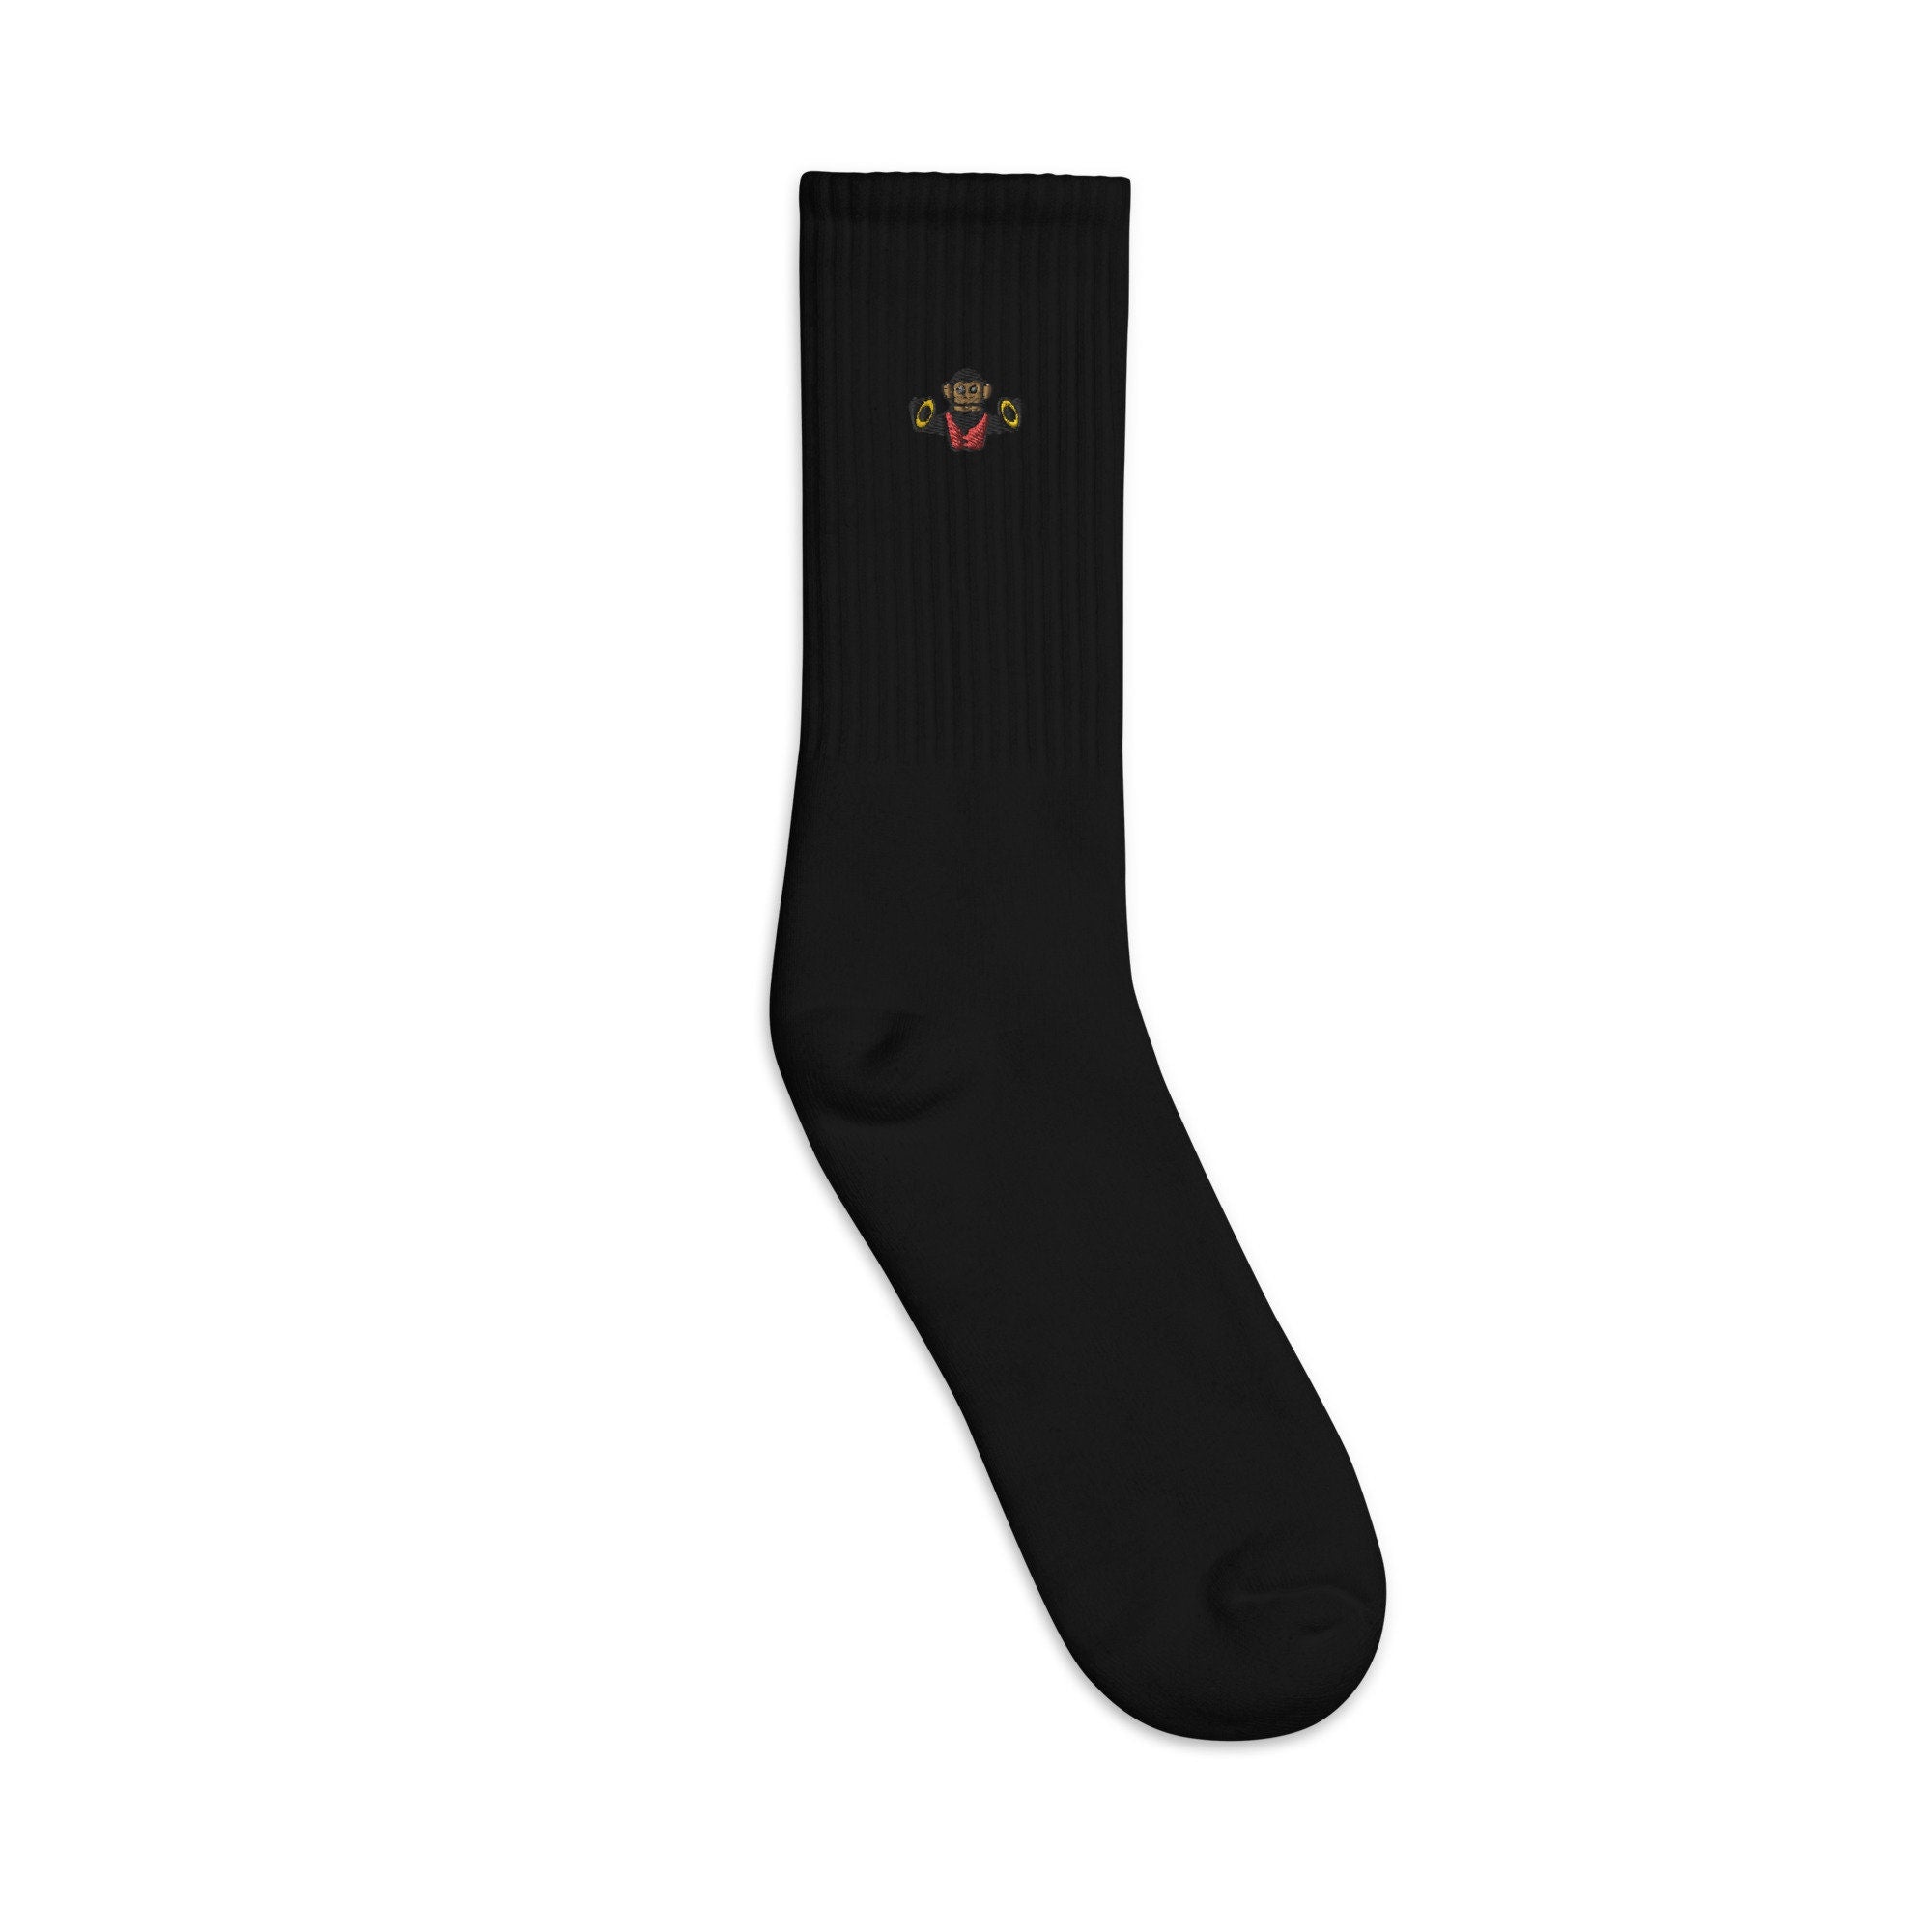 Cymbal Monkey Embroidered Socks, Premium Embroidered Socks, Long Socks Gift - Multiple Colors